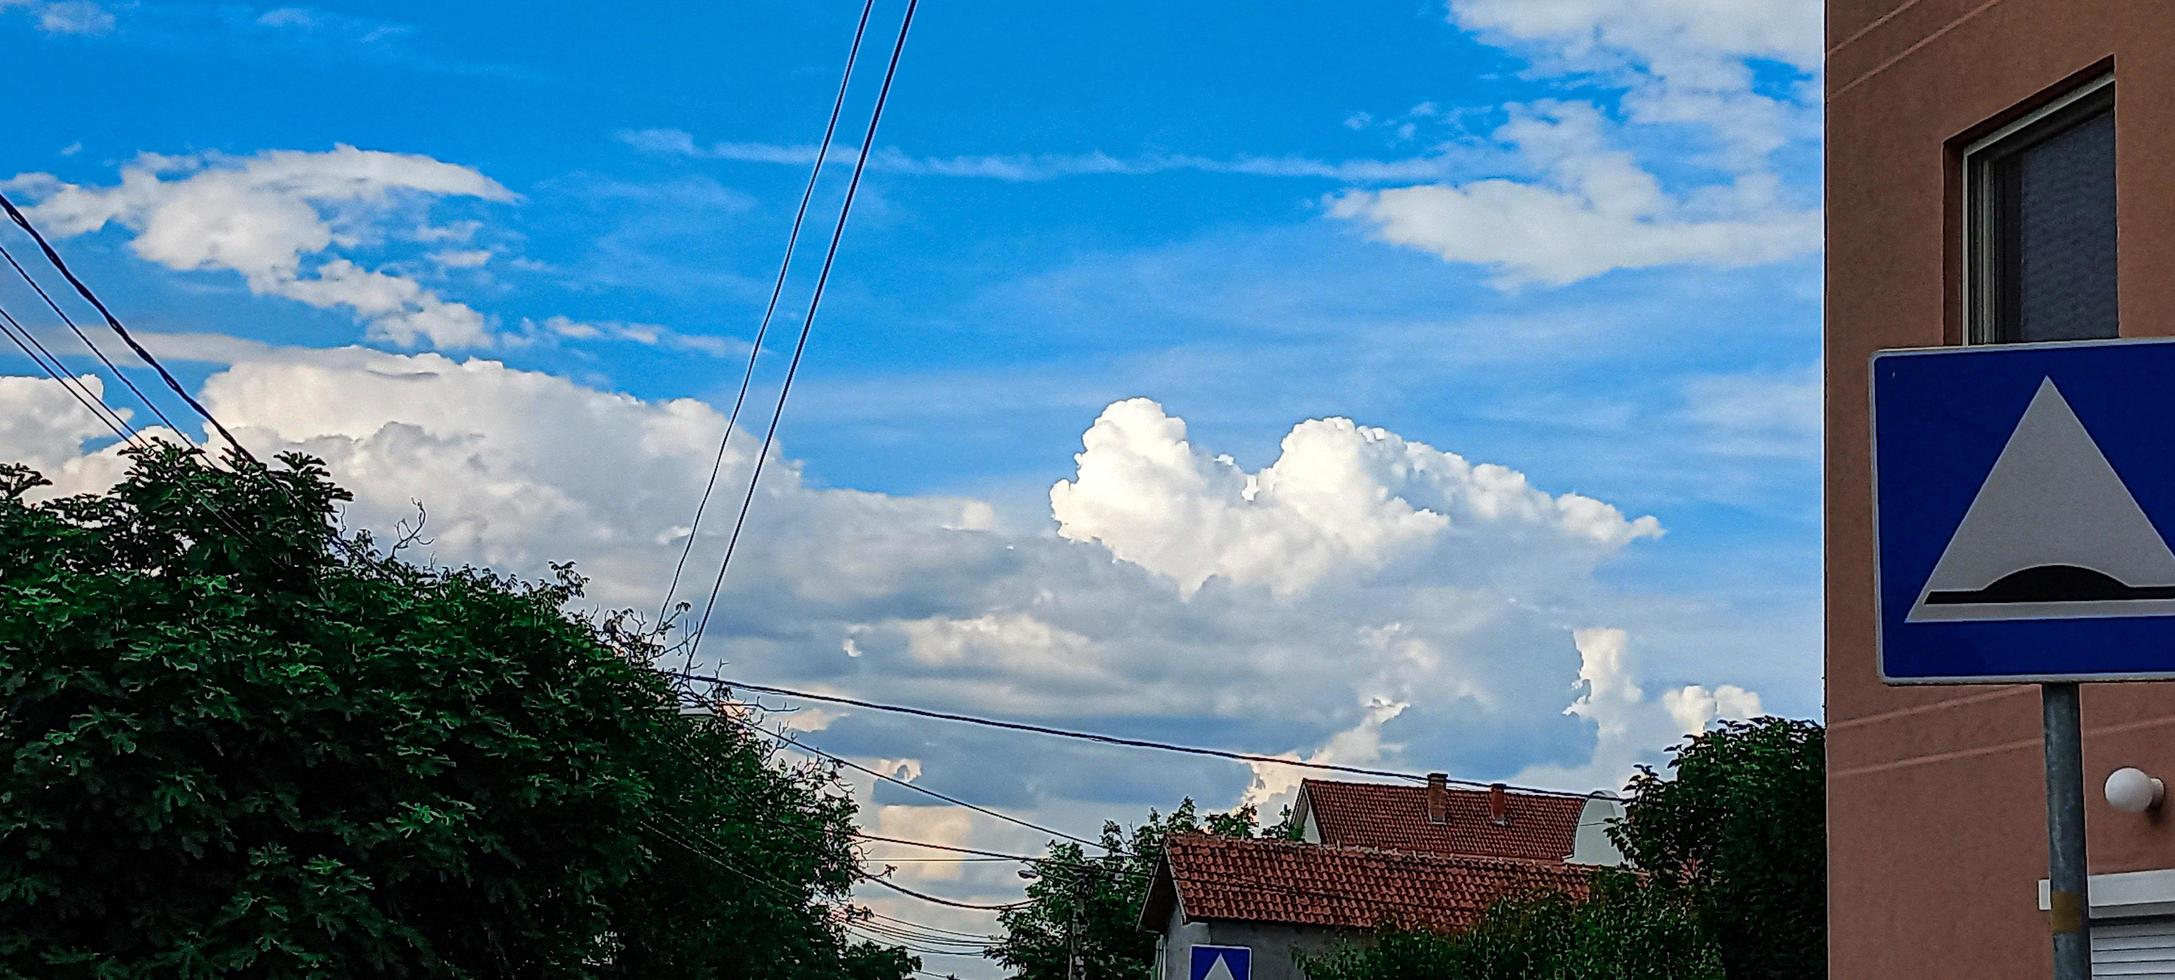 incredibili nuvole di belgrado in serbia foto